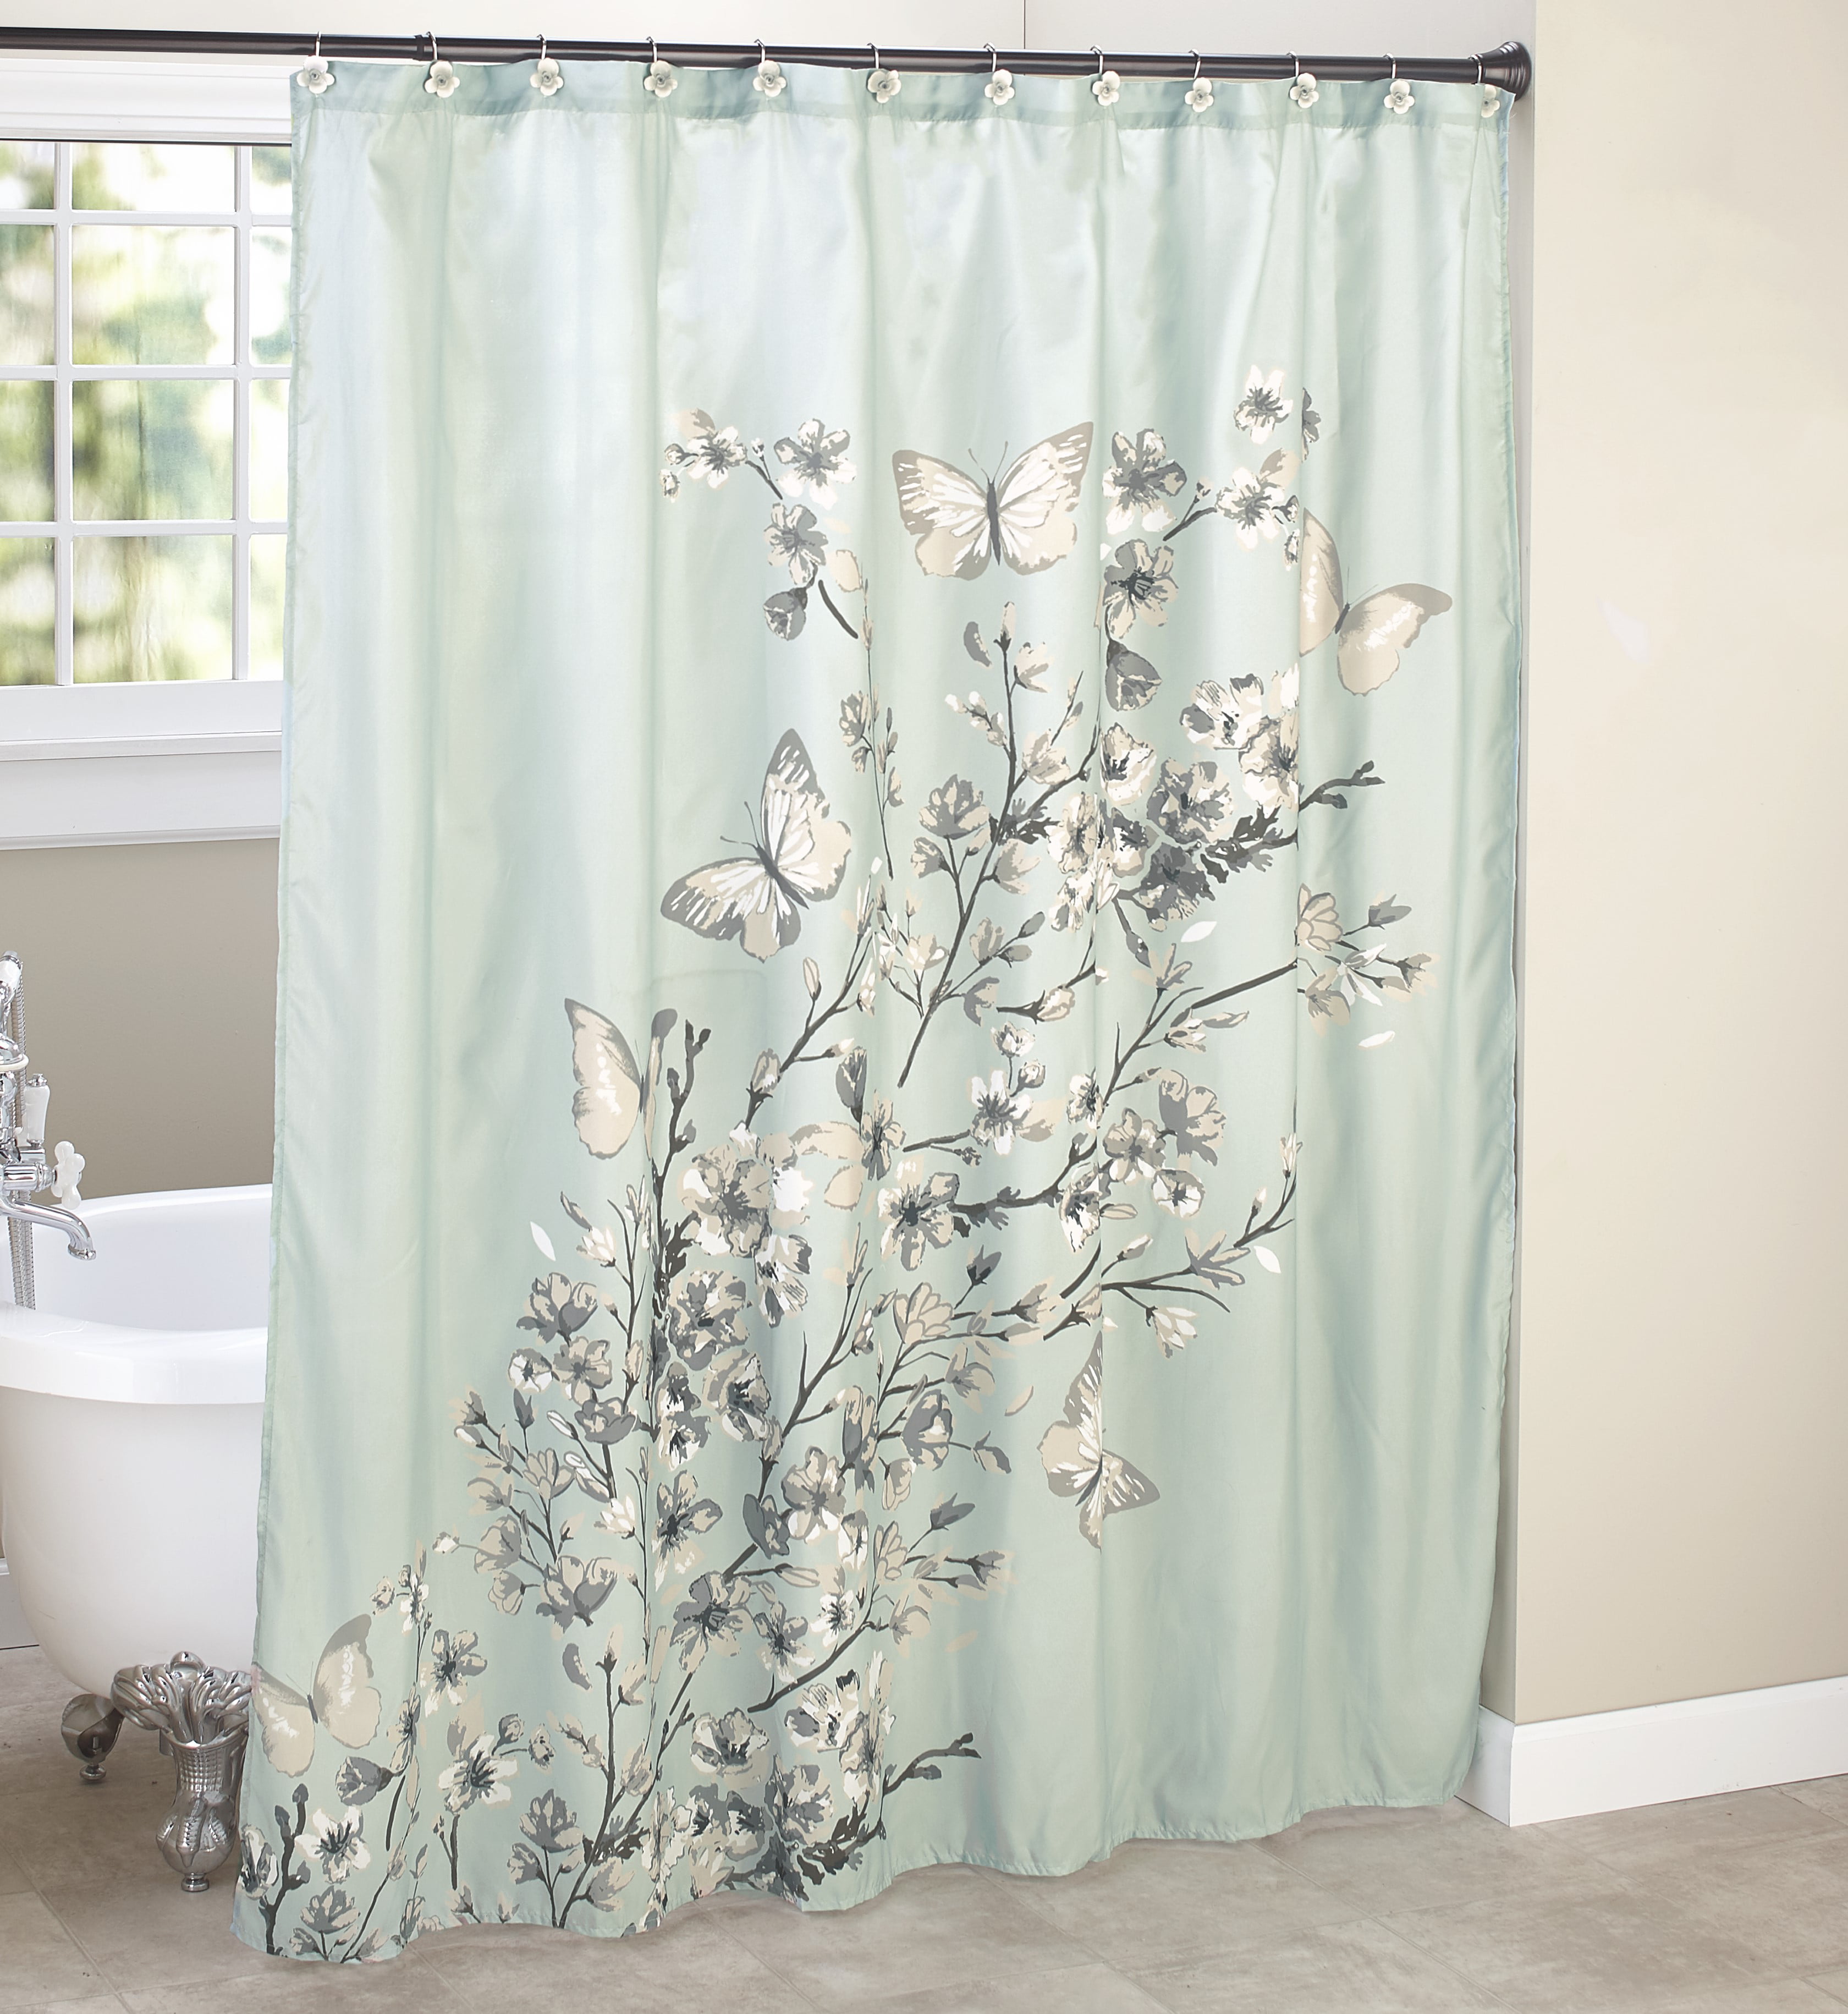 Cherry Blossoms Bathroom Decor Shower Curtain Set Waterproof Fabric w/12 Hooks 